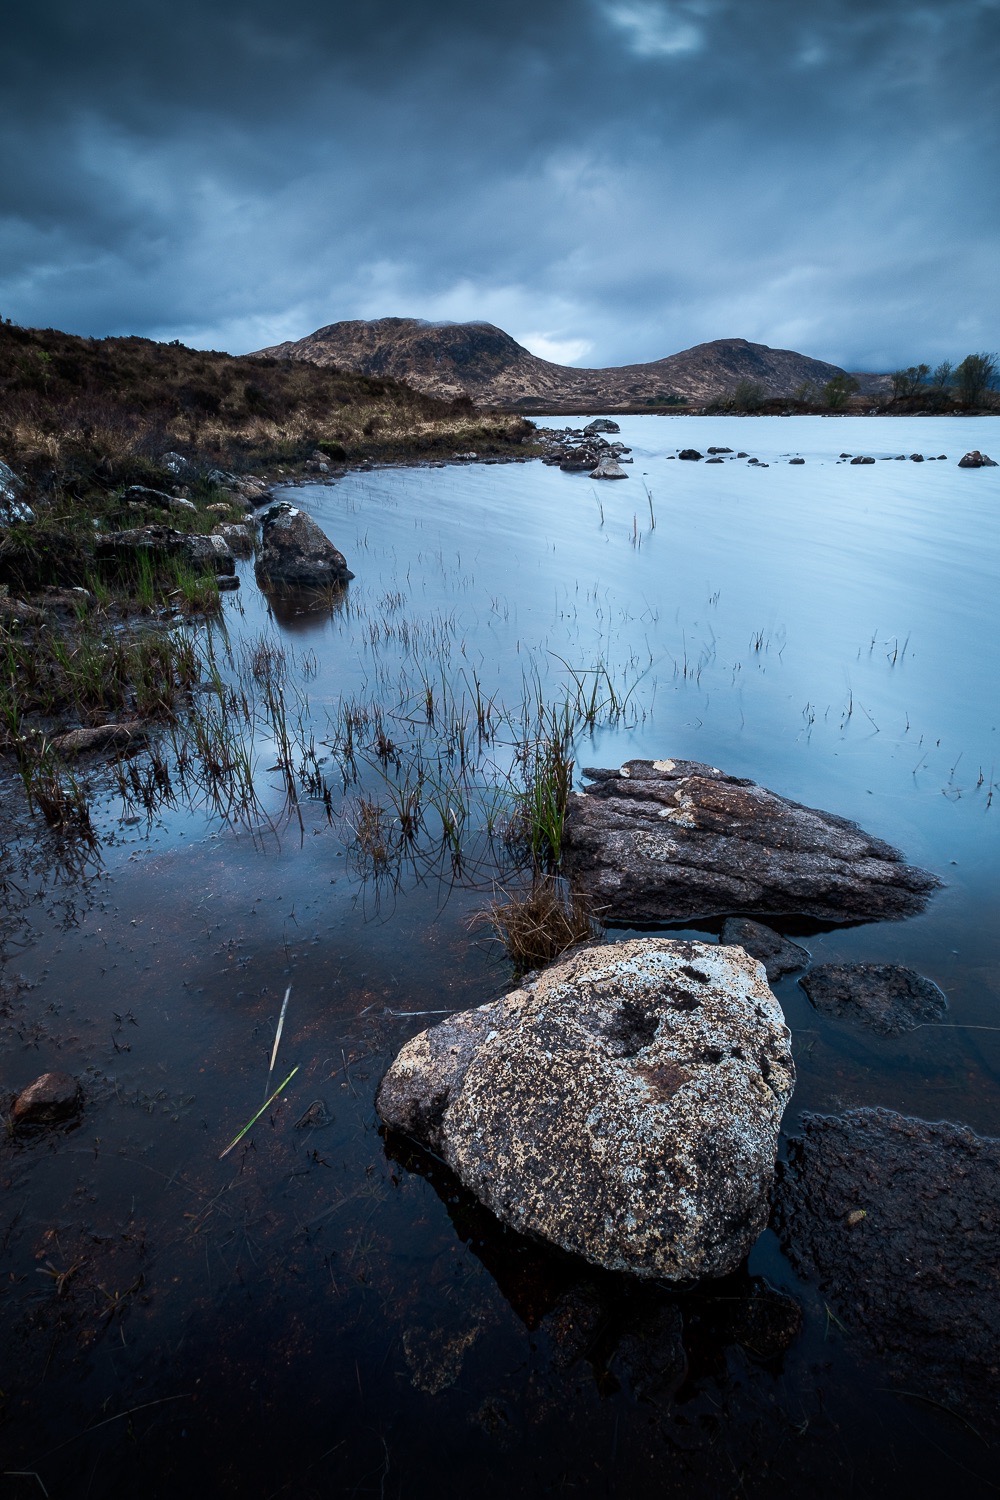 0016-scotland-tamron-le monde de la photo-paysage-20190508063009-compress.jpg